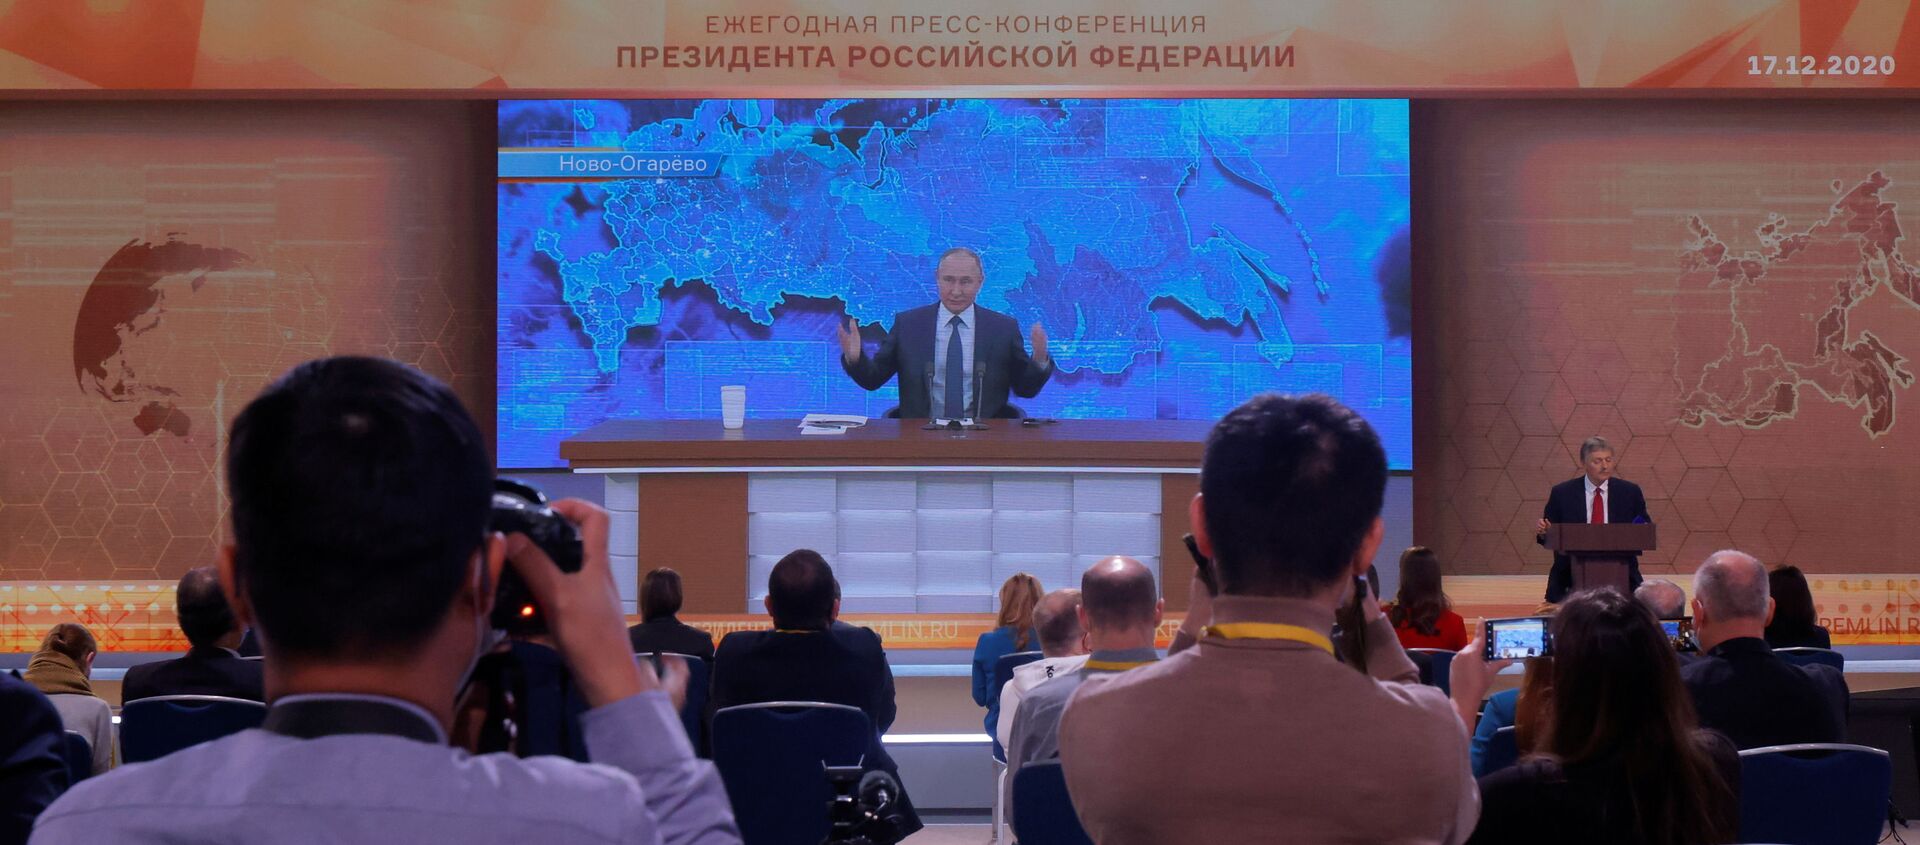 Comienza la rueda de prensa anual del presidente ruso Vladímir Putin - Sputnik Mundo, 1920, 17.12.2020